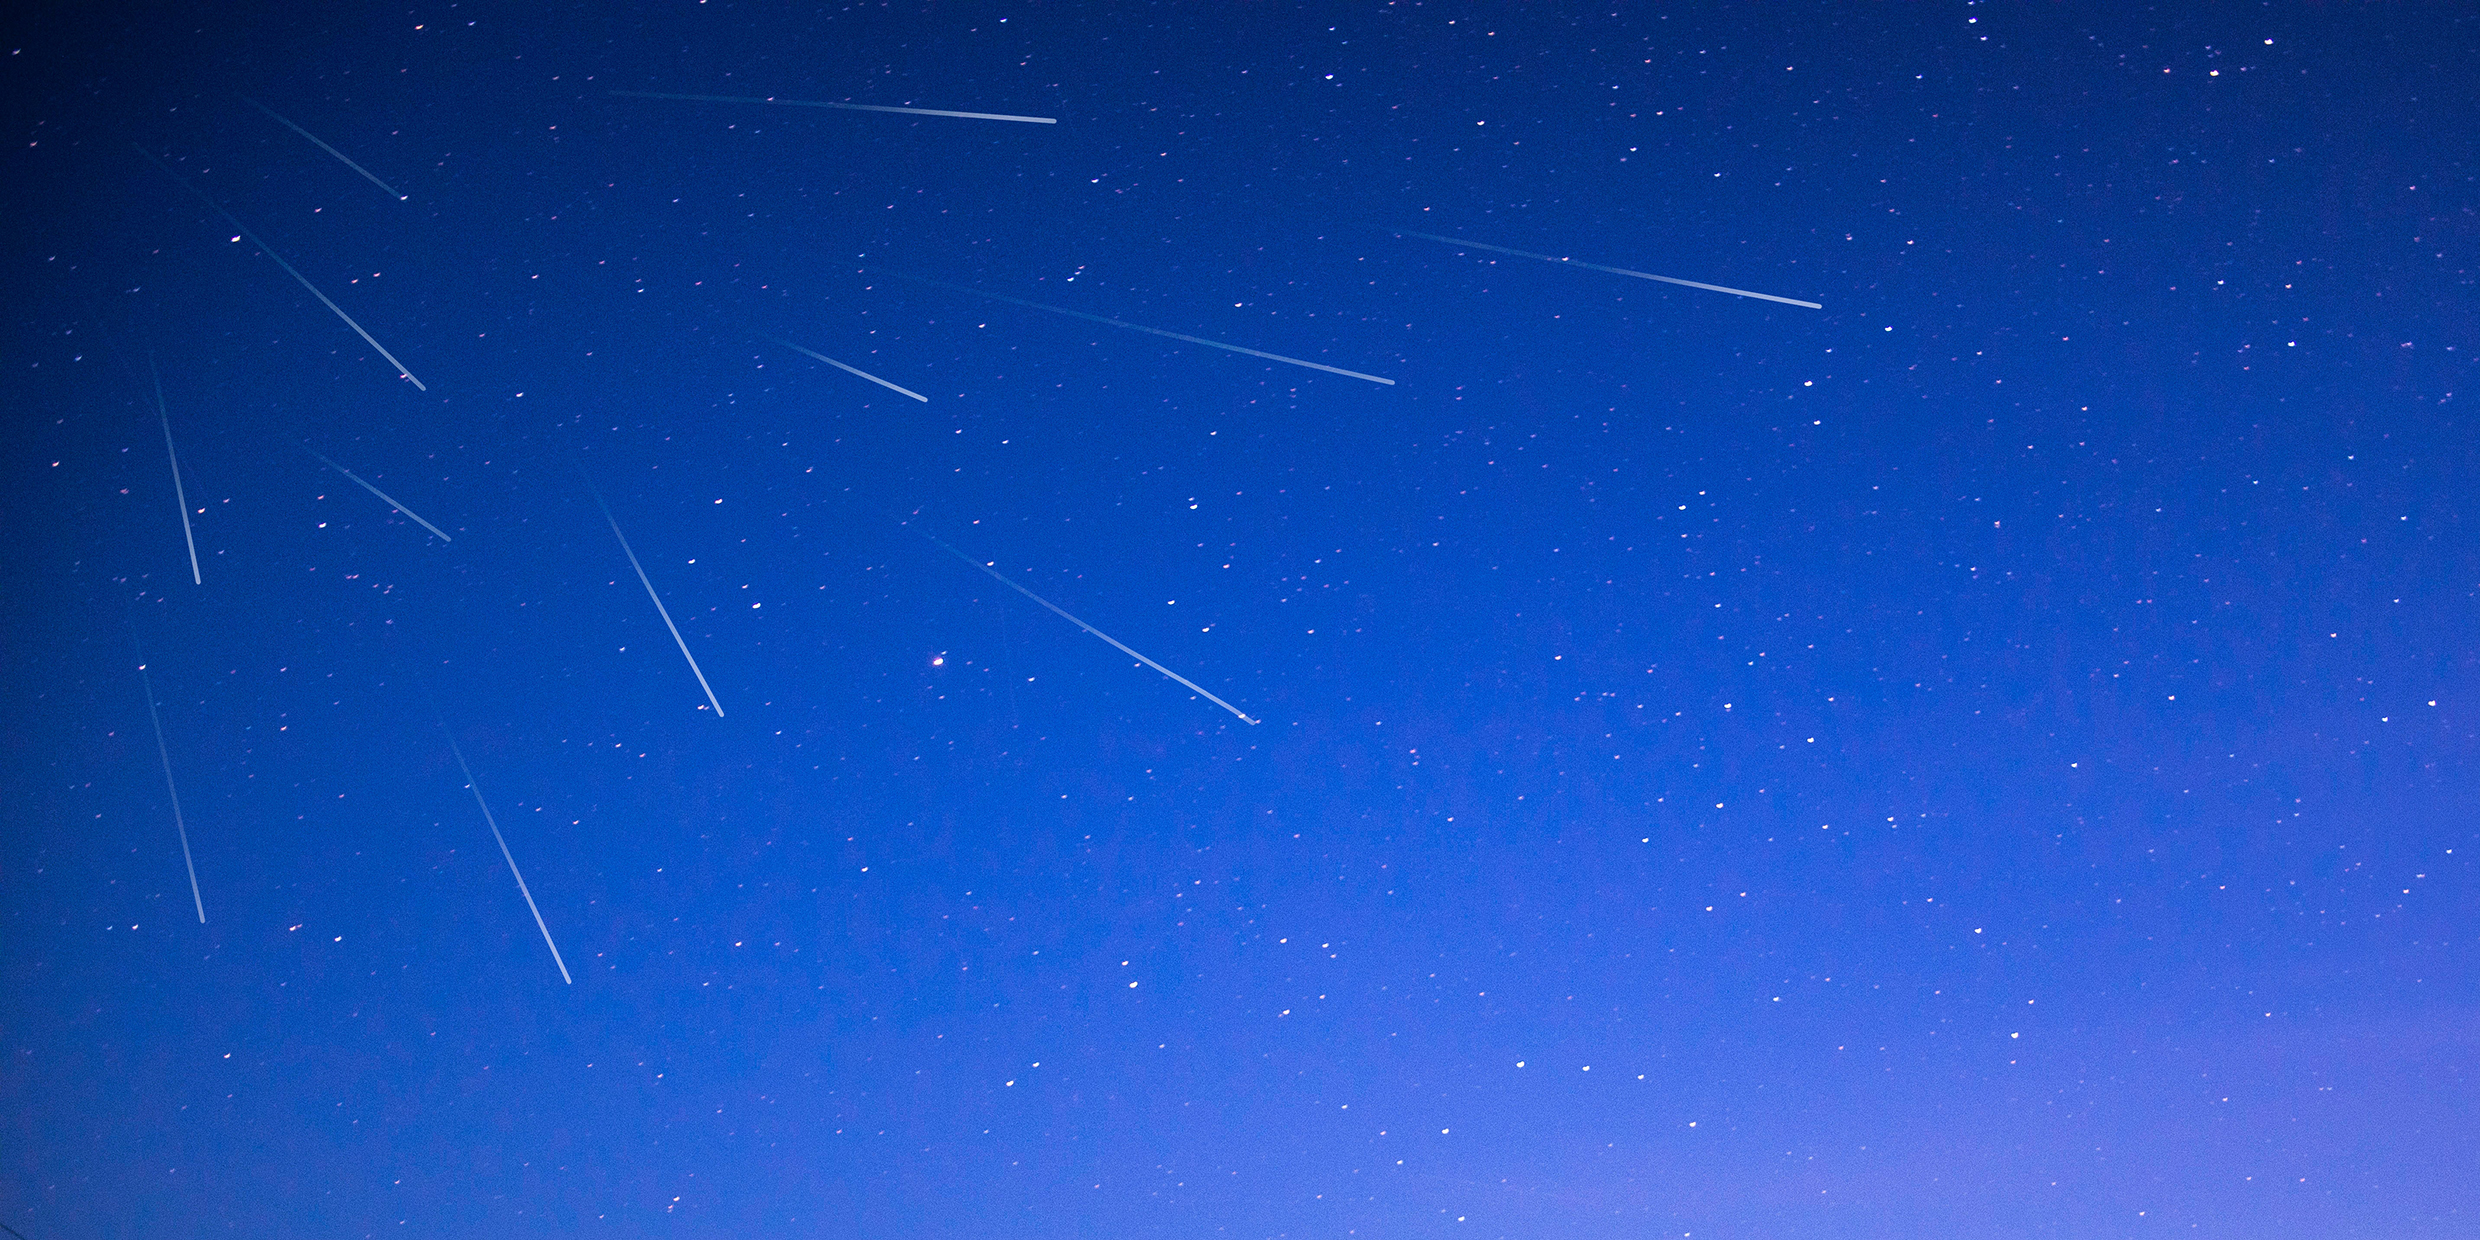 Image of a meteor-streaked night sky